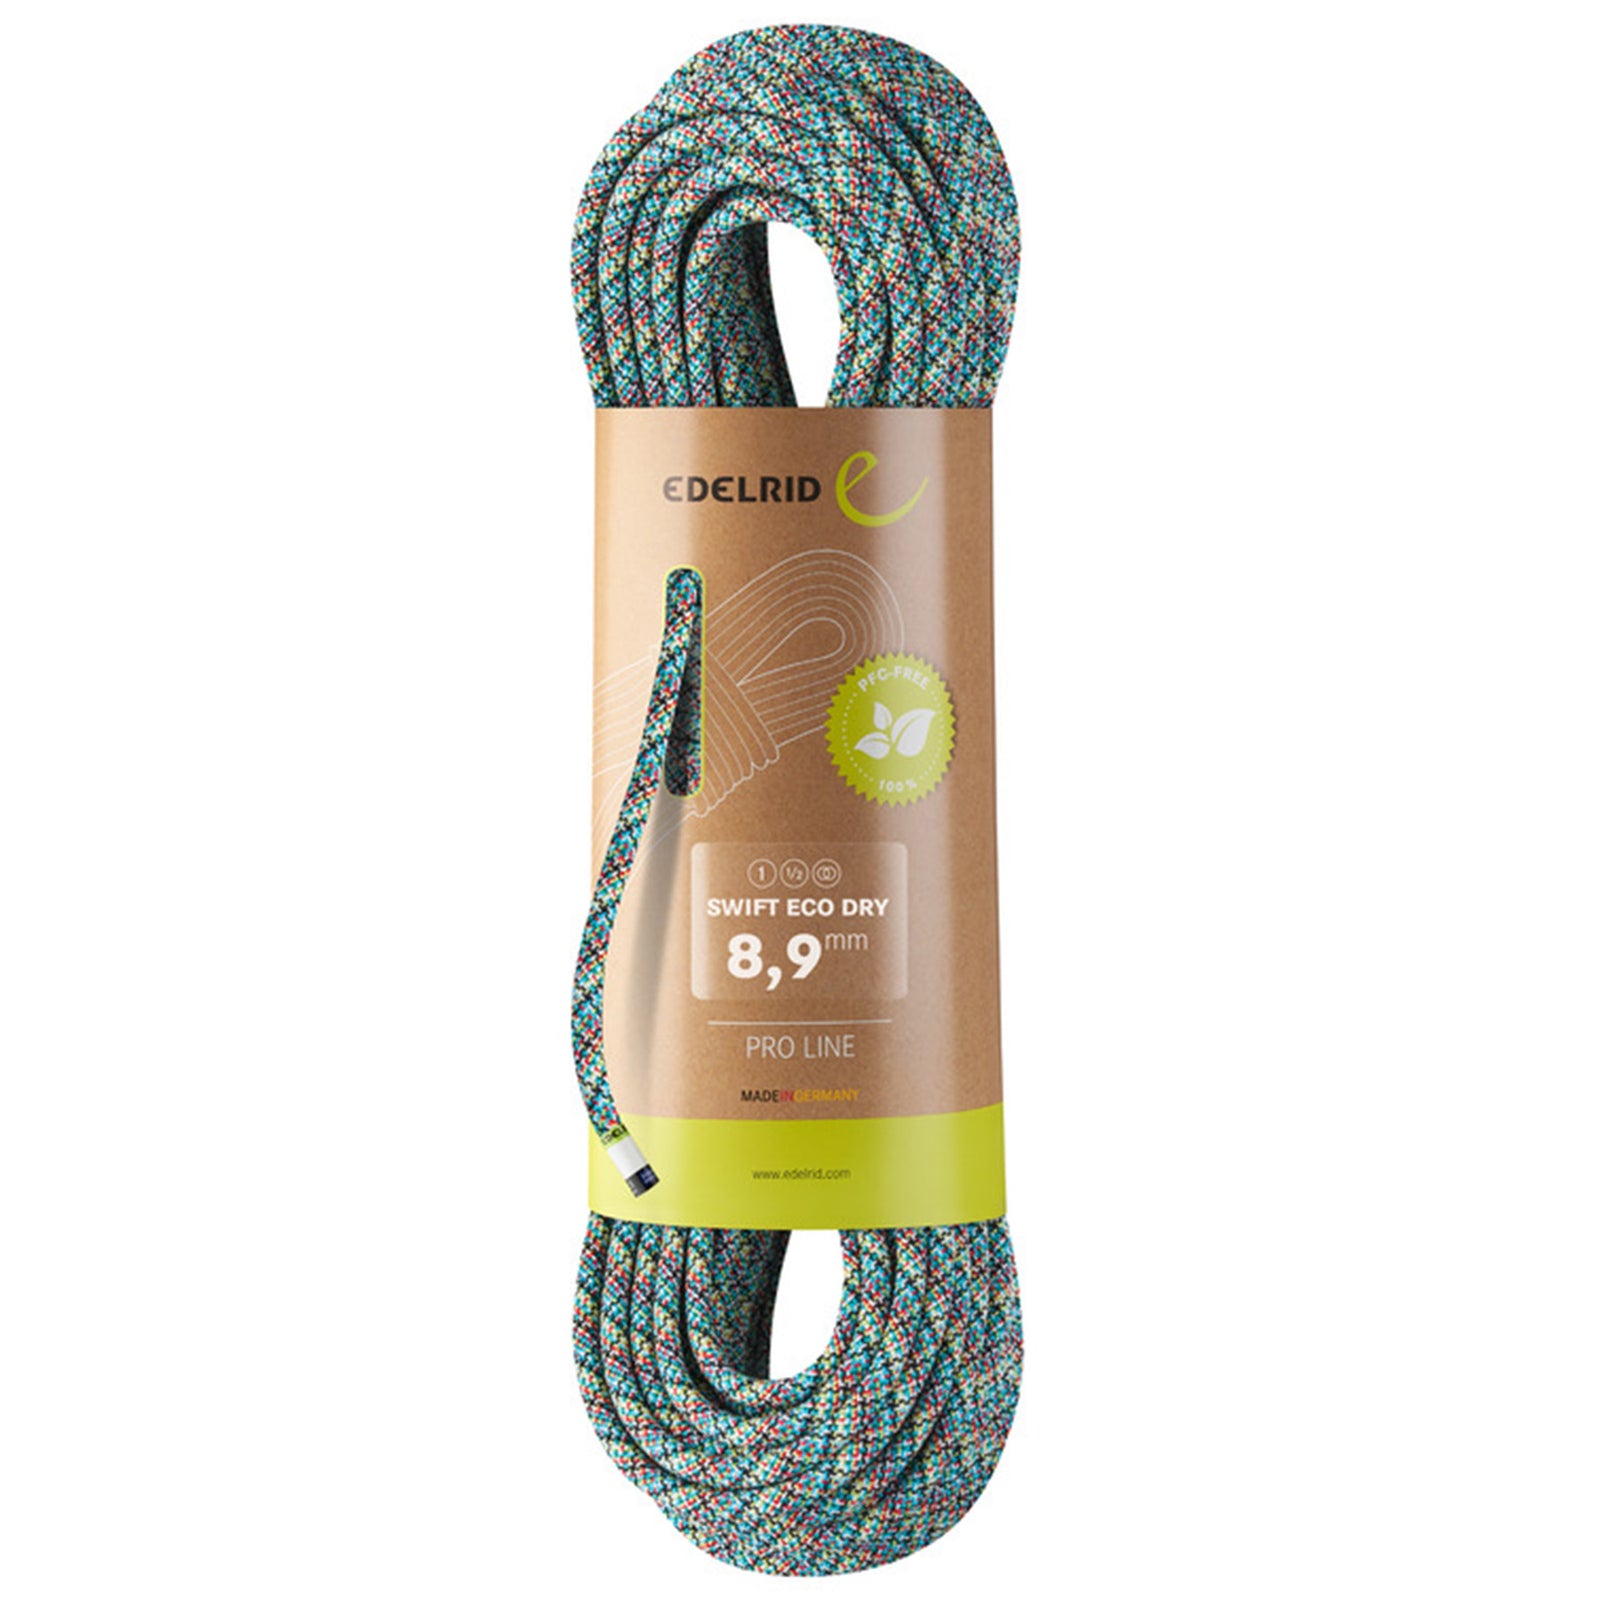 Edelrid Swift Eco Dry 8.9mm Climbing Rope